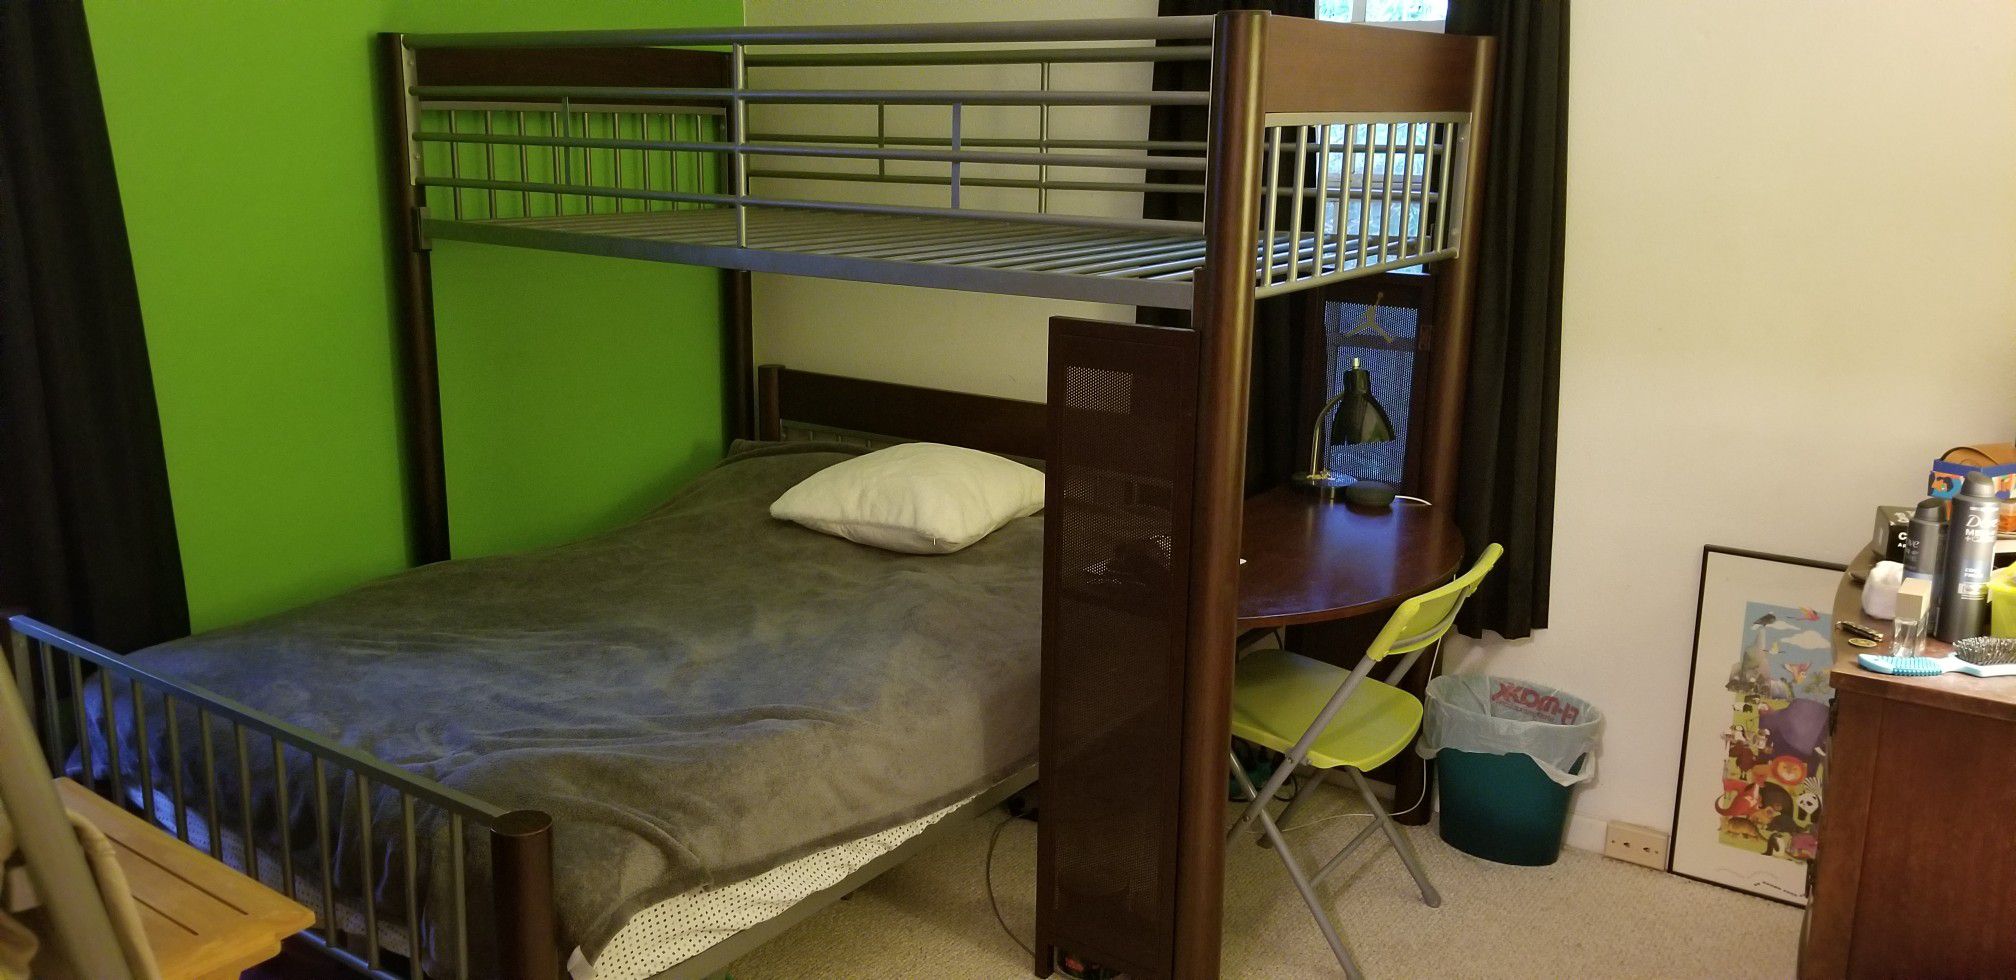 Room To Go Kids bunk beds w/desk.